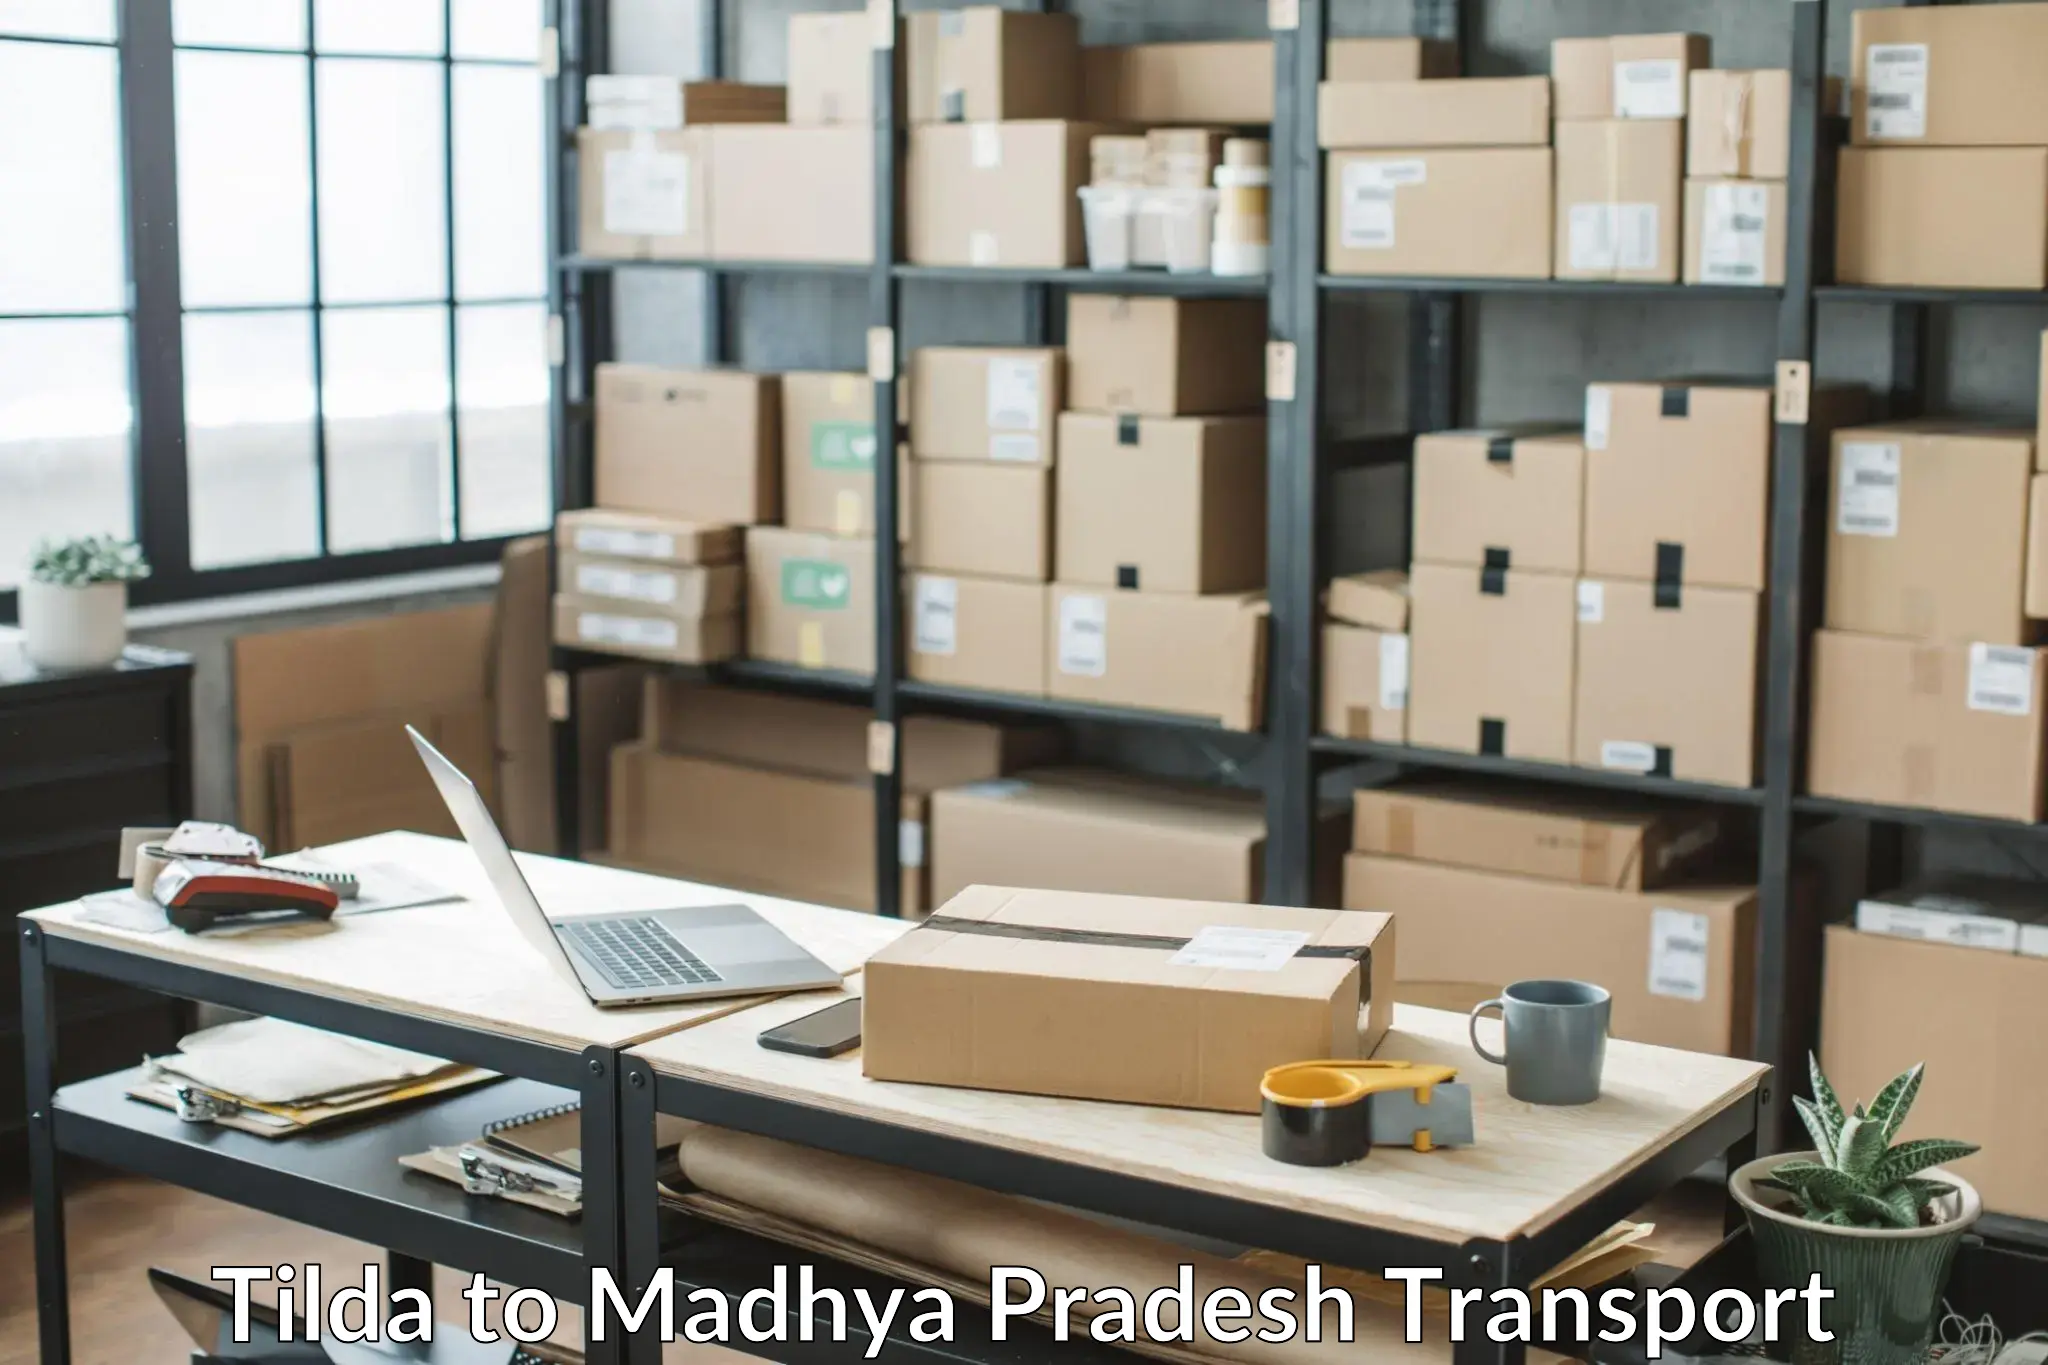 Delivery service Tilda to Madhya Pradesh